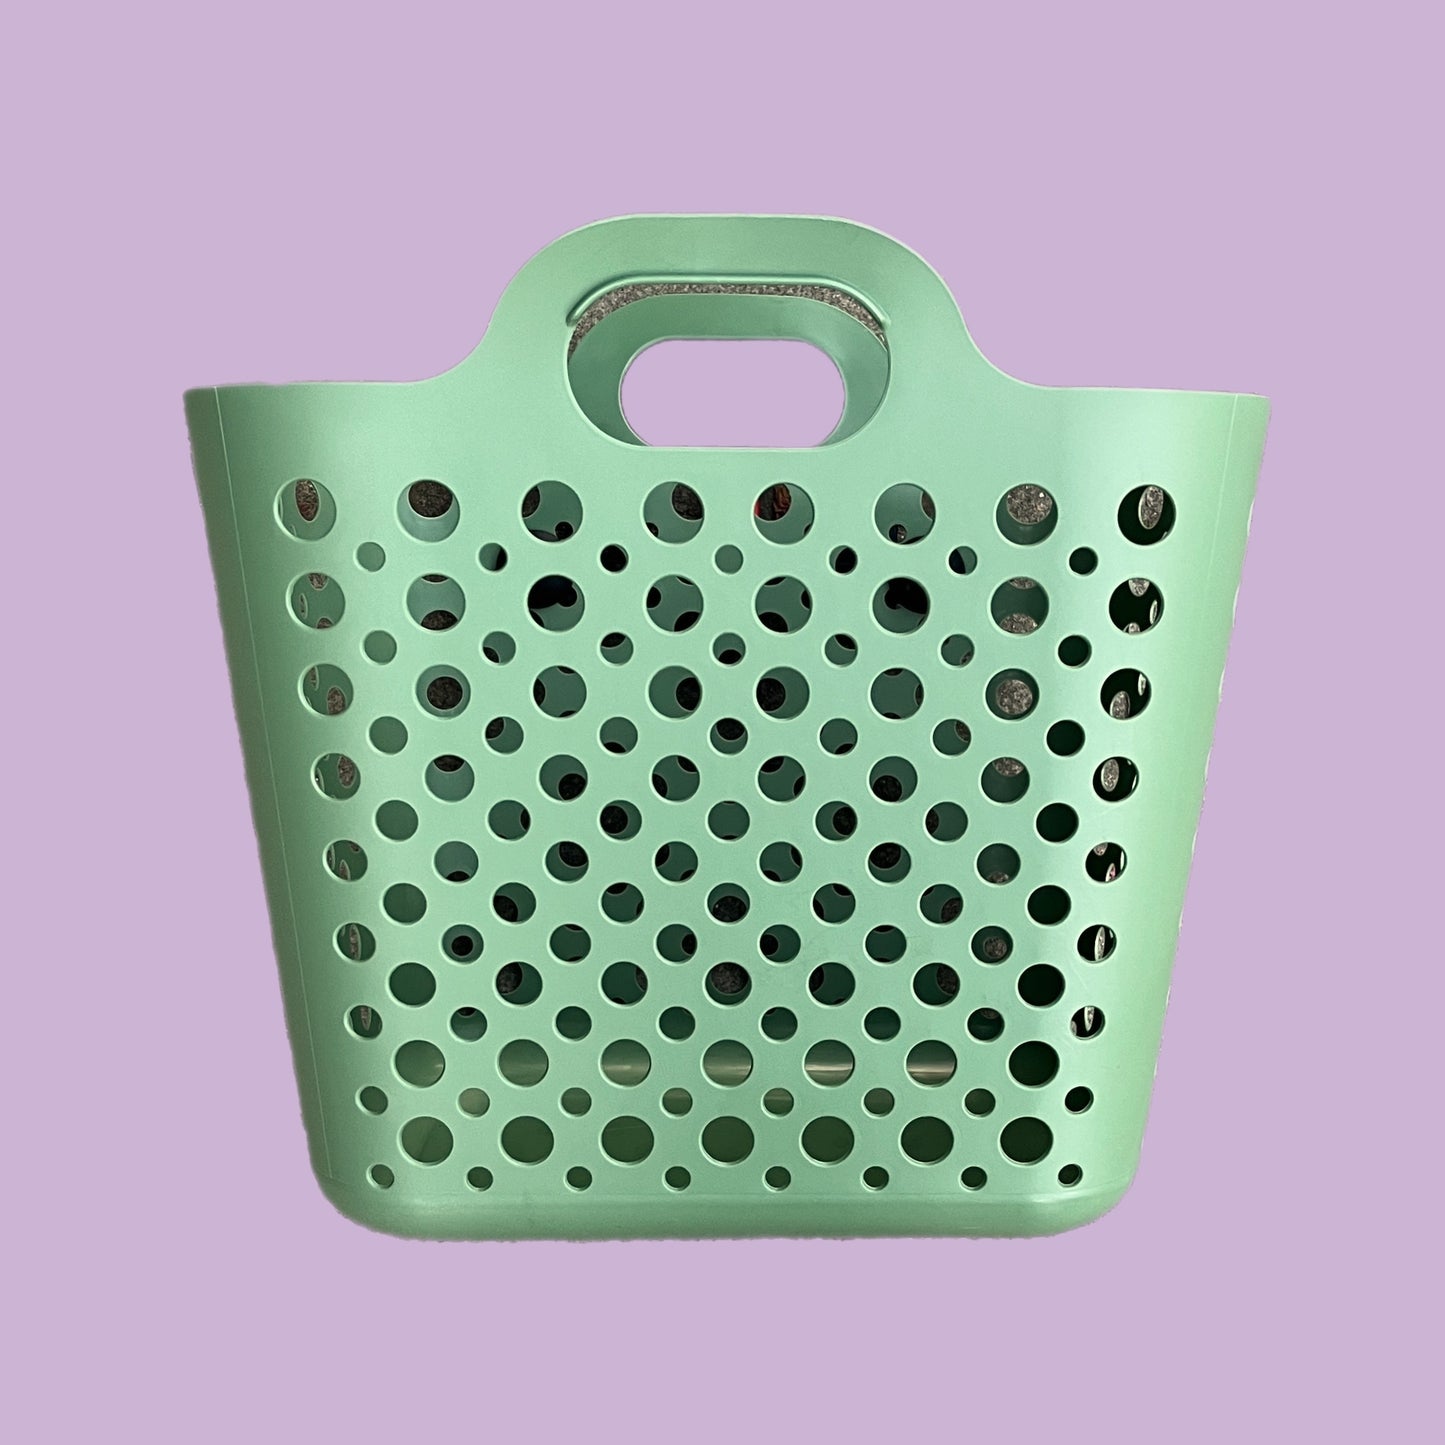 Bike laundry pannier bicycle basket rigid plastic lightweight bag